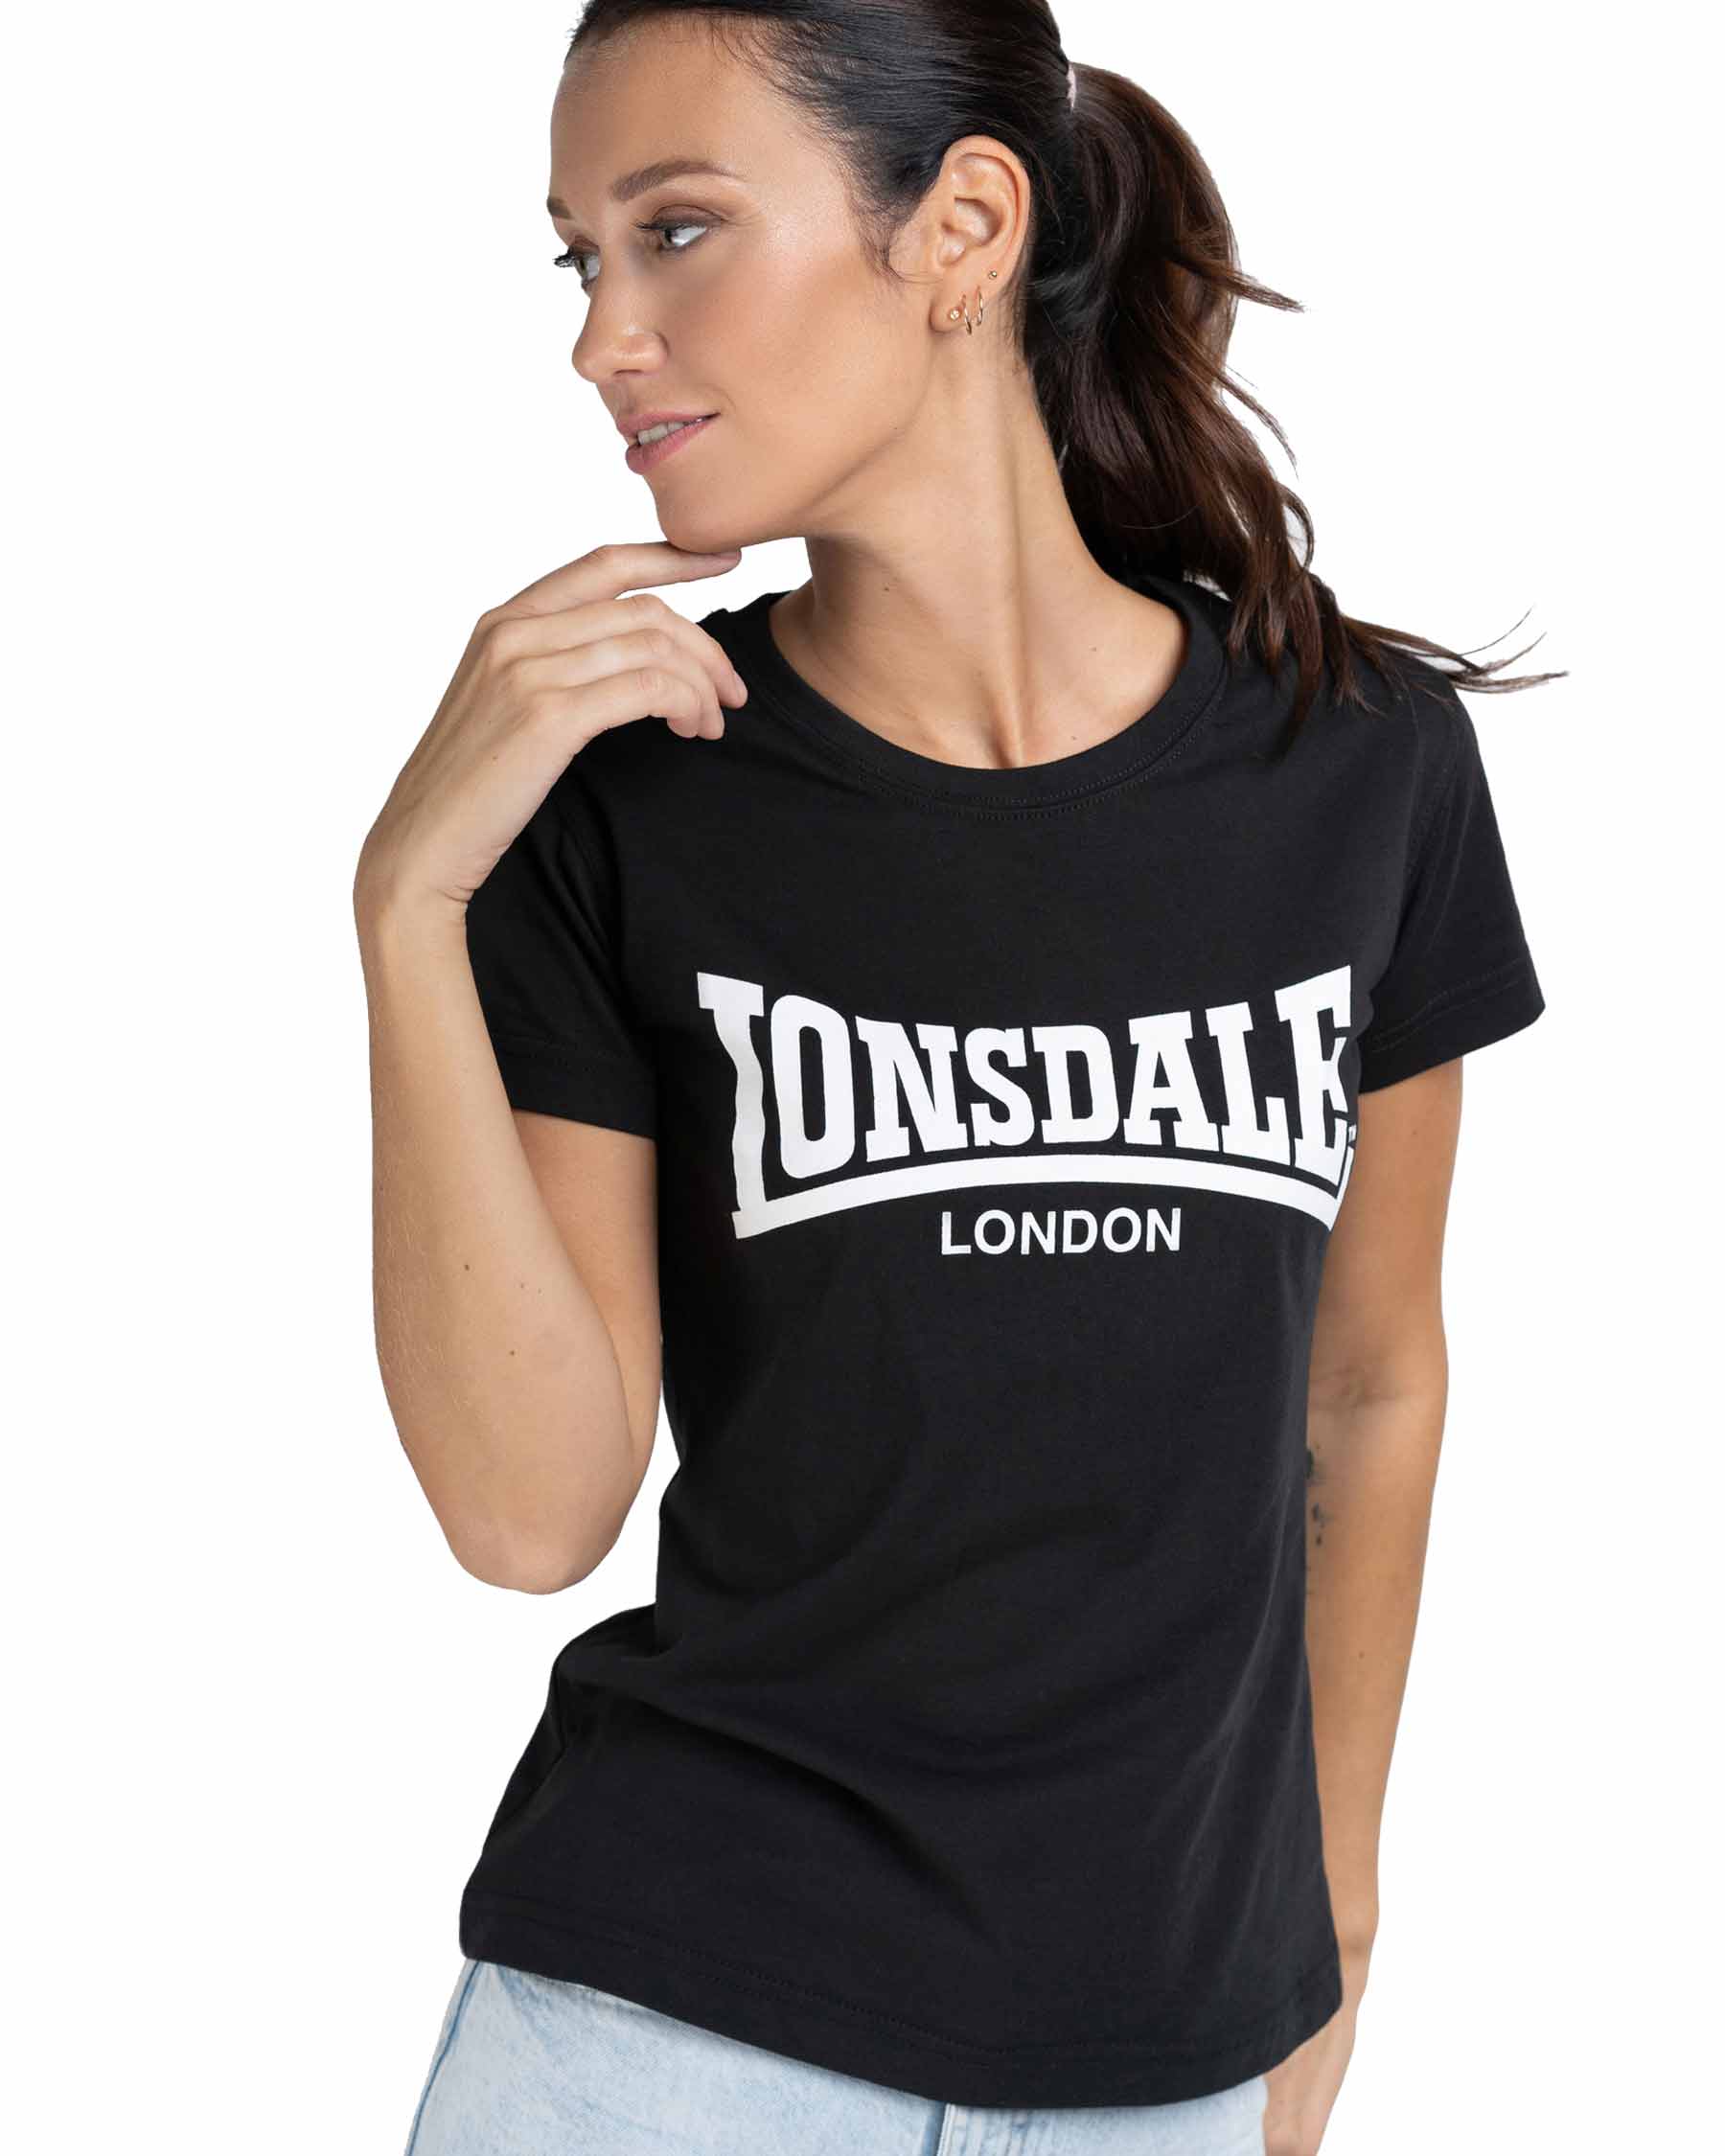 Lonsdale women t-shirt Cartmel - Ladies T-Shirts - Lonsdale London